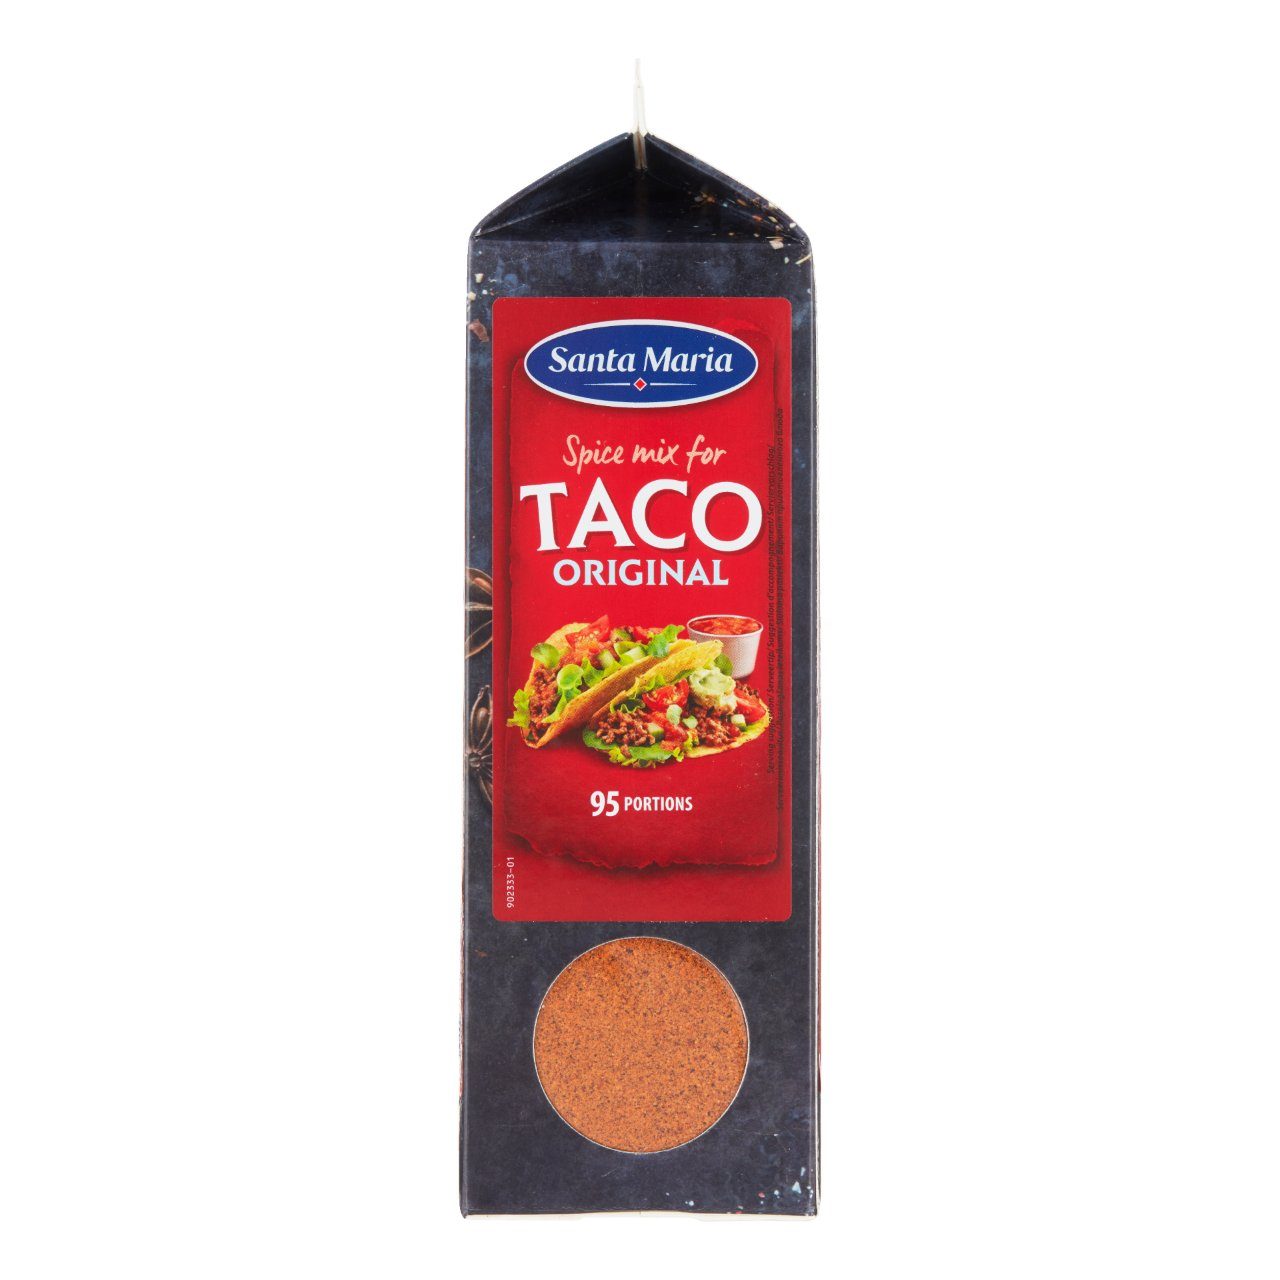 Taco kruidenmix